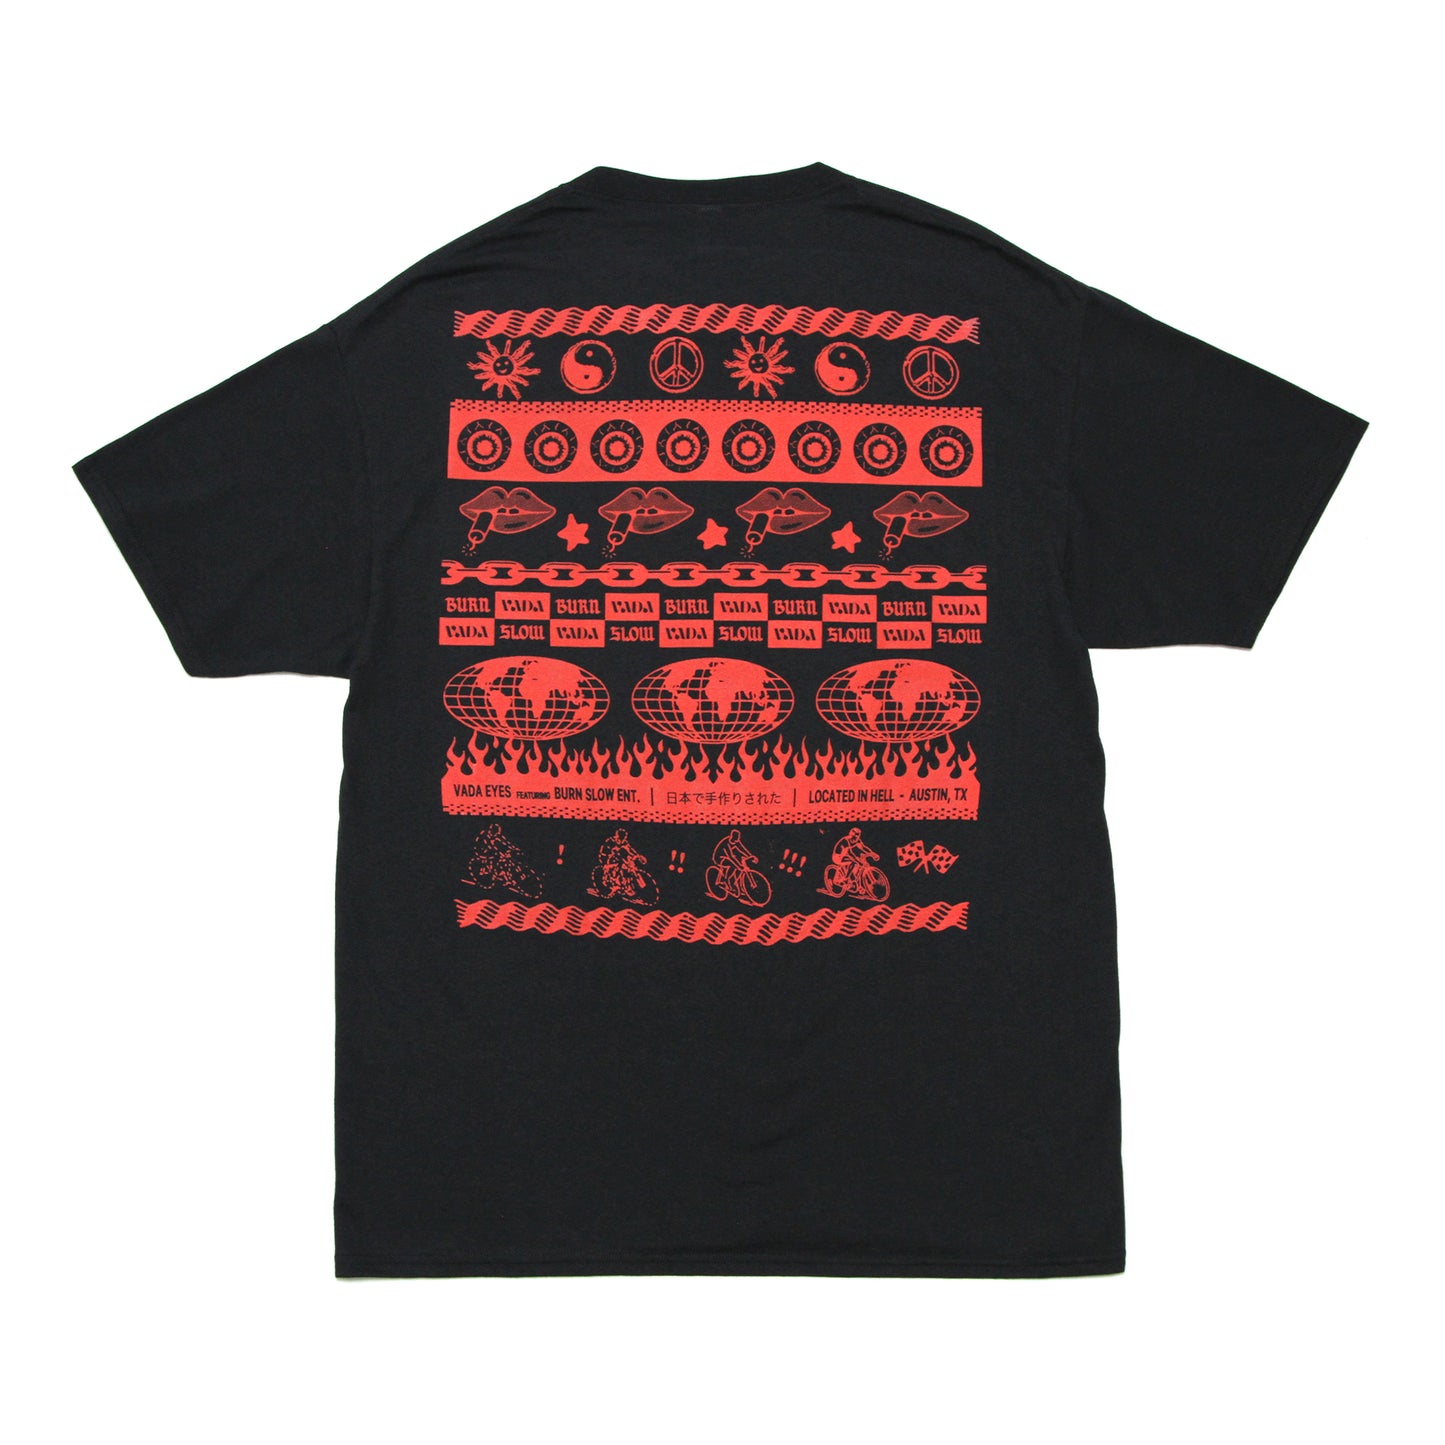 BURN SLOW - Repeater Logo T-Shirt/Black